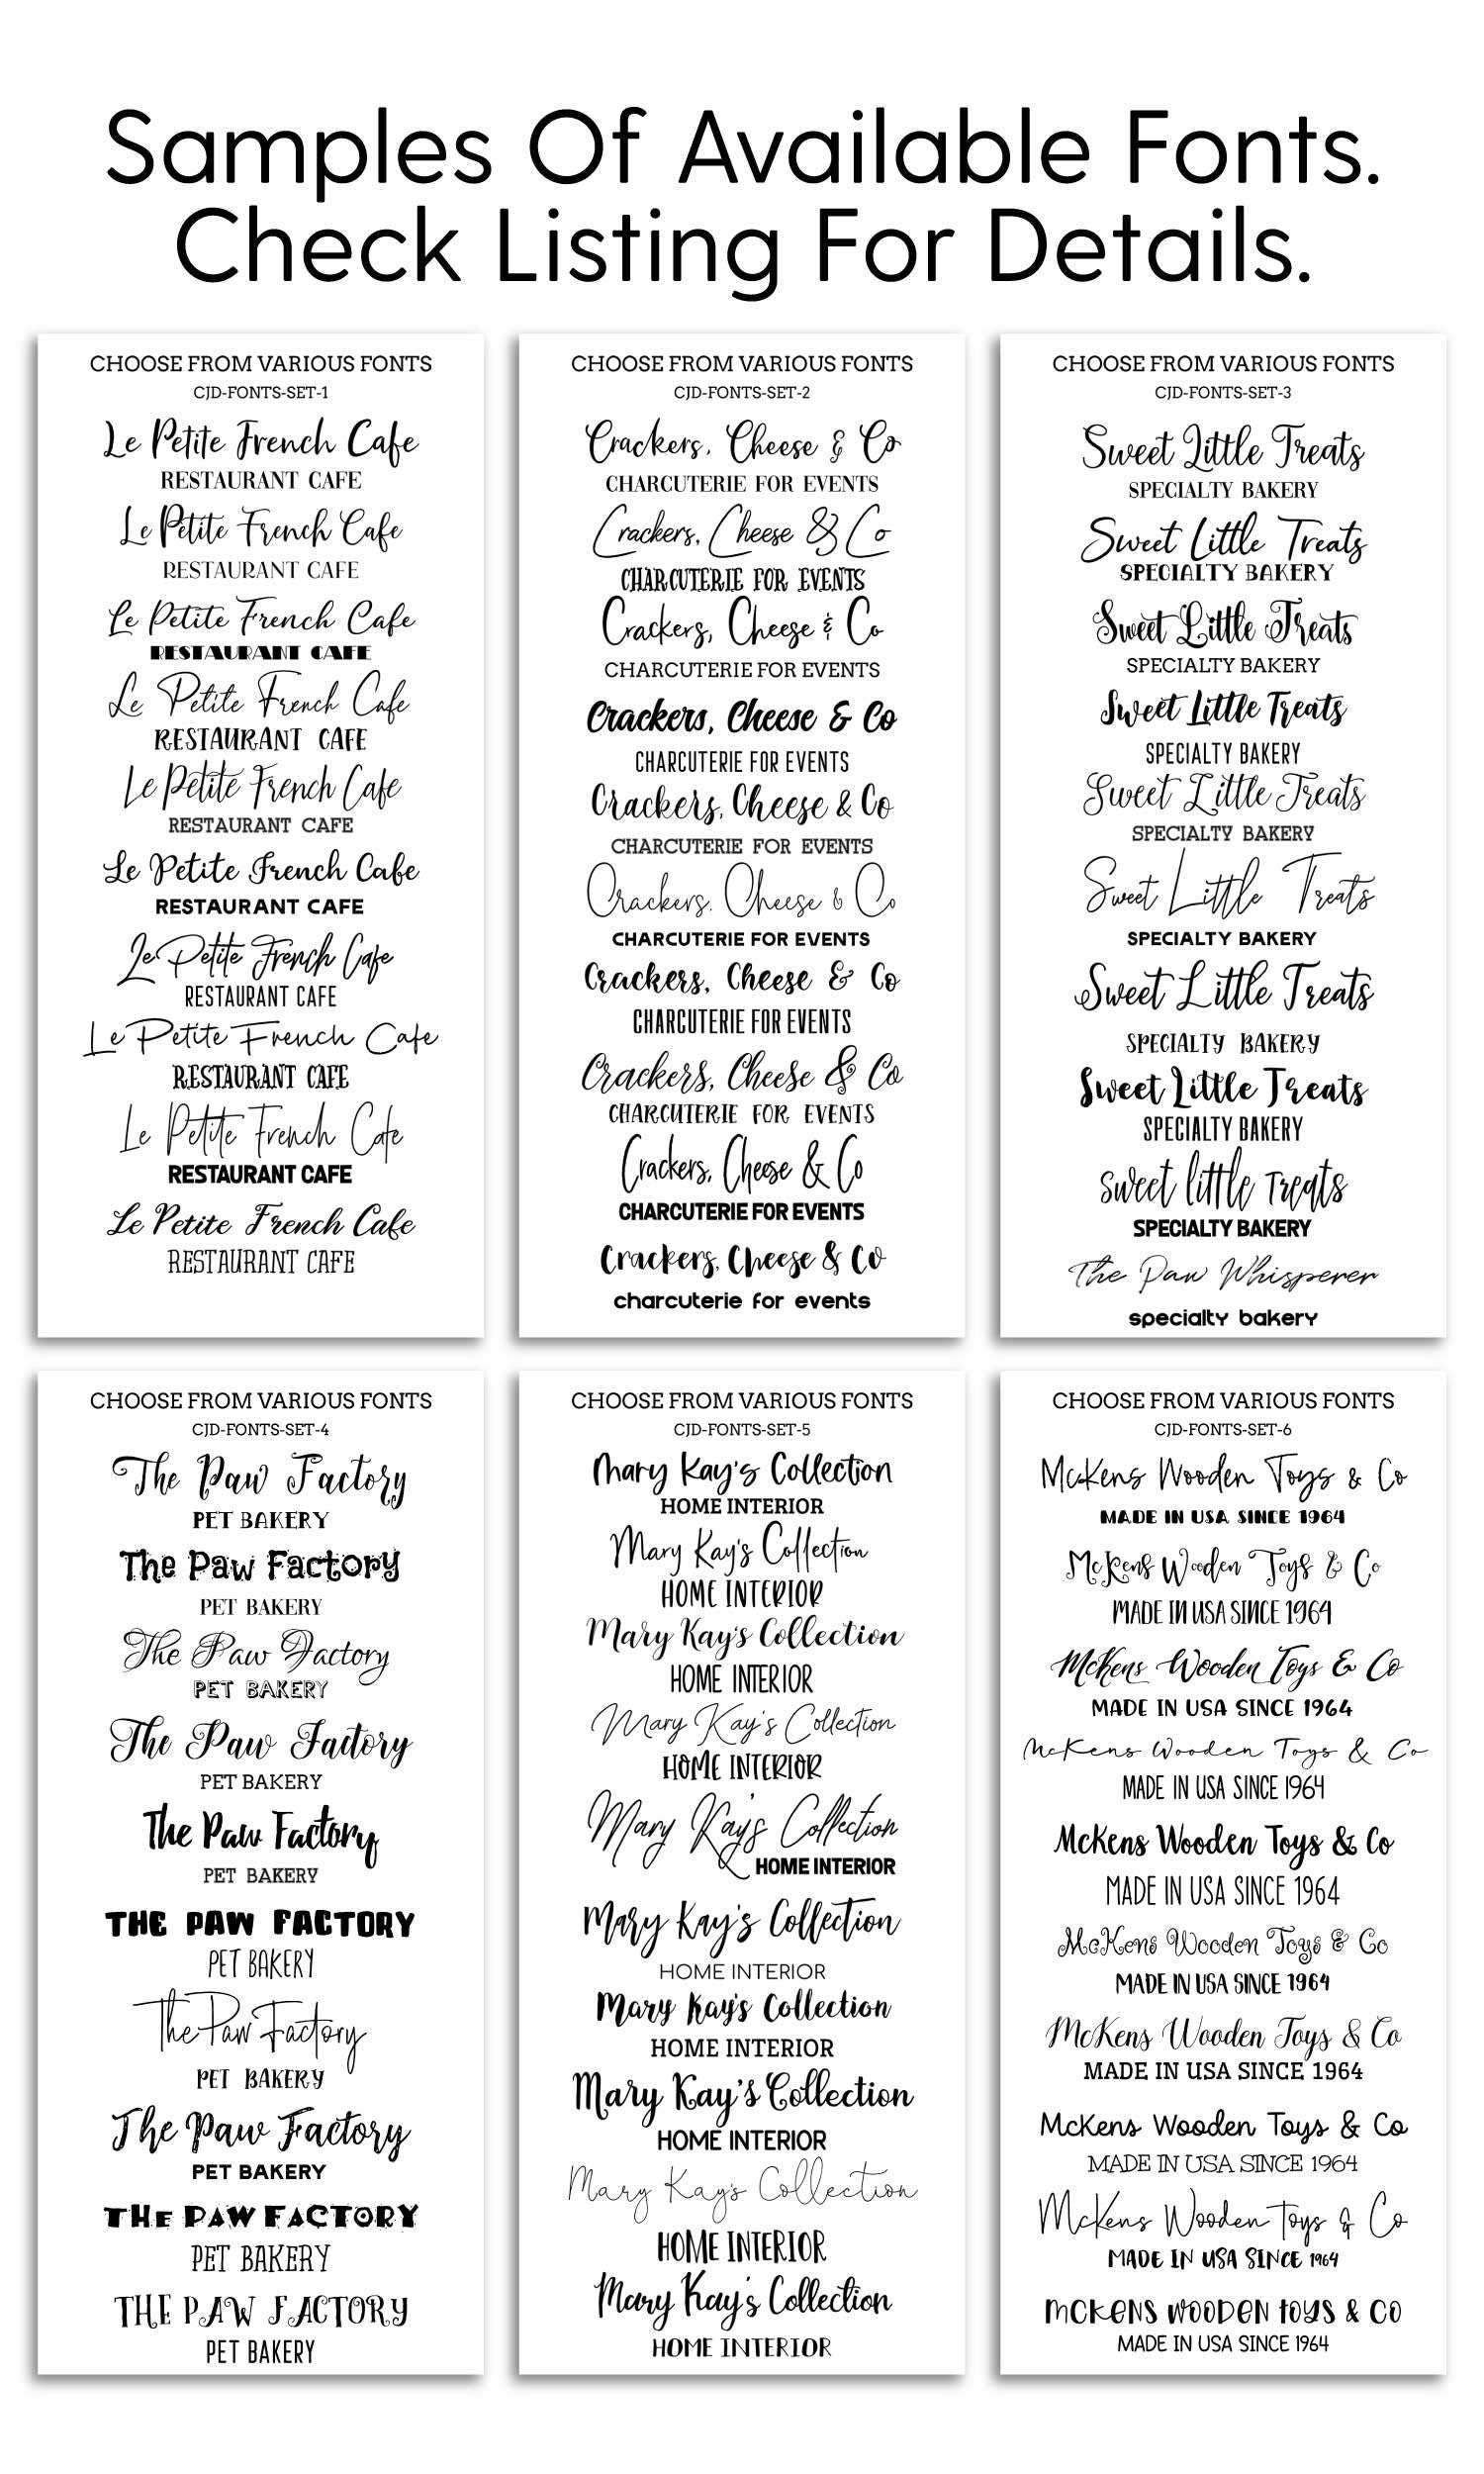 Dog Bakery Halloween Flyer Price List, Pet Bakery Menu Card - Candy Jar Studios